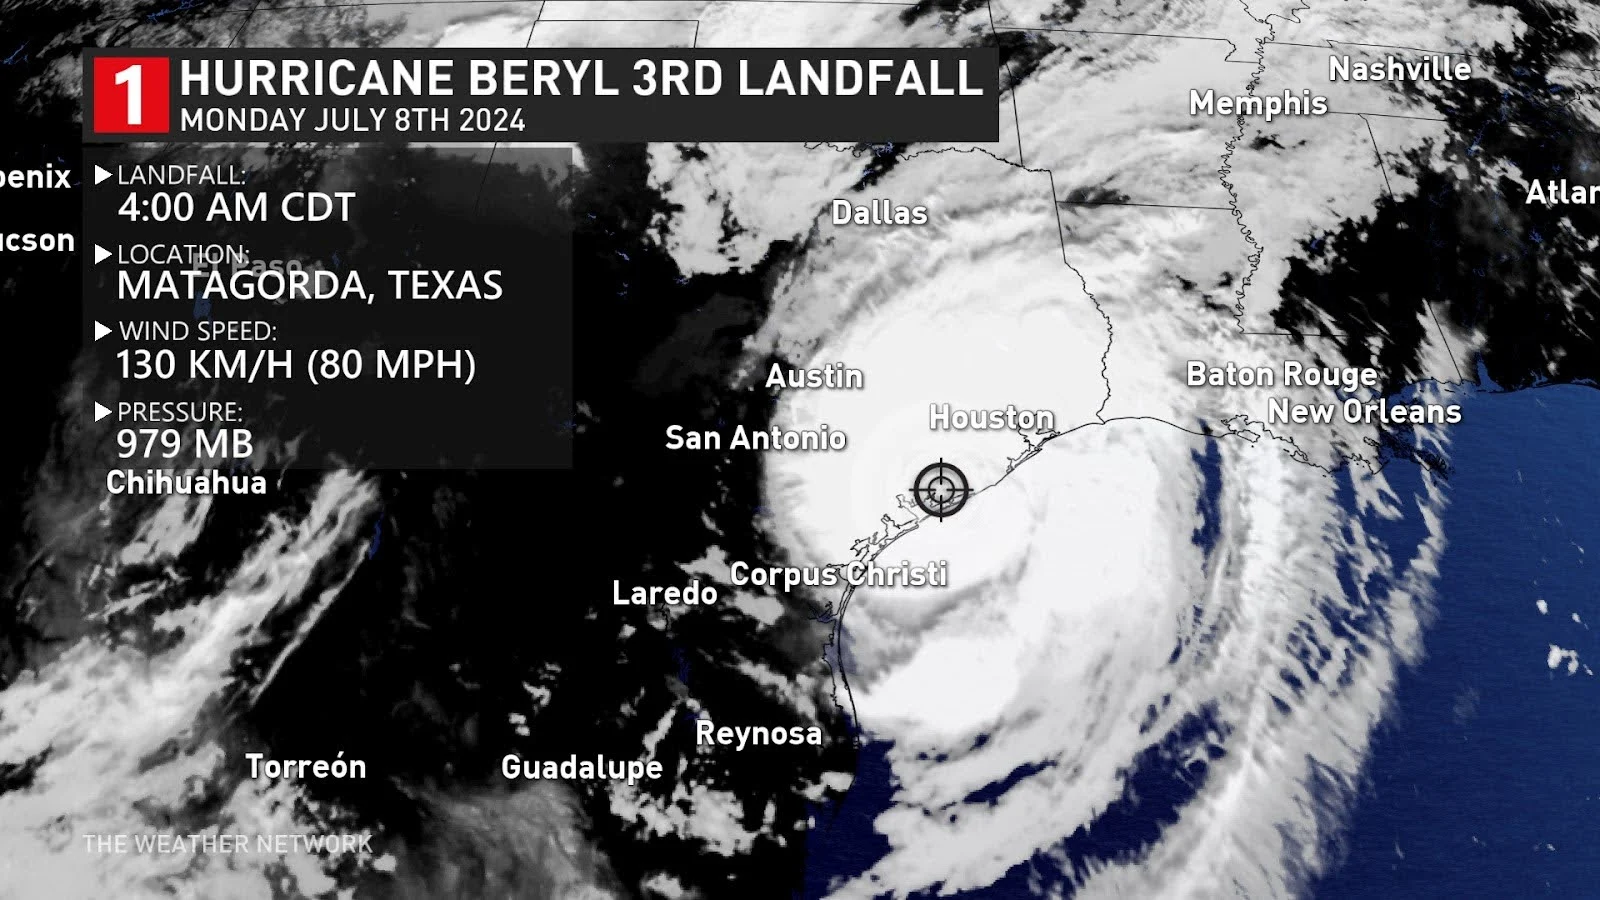 Beryl third landfall